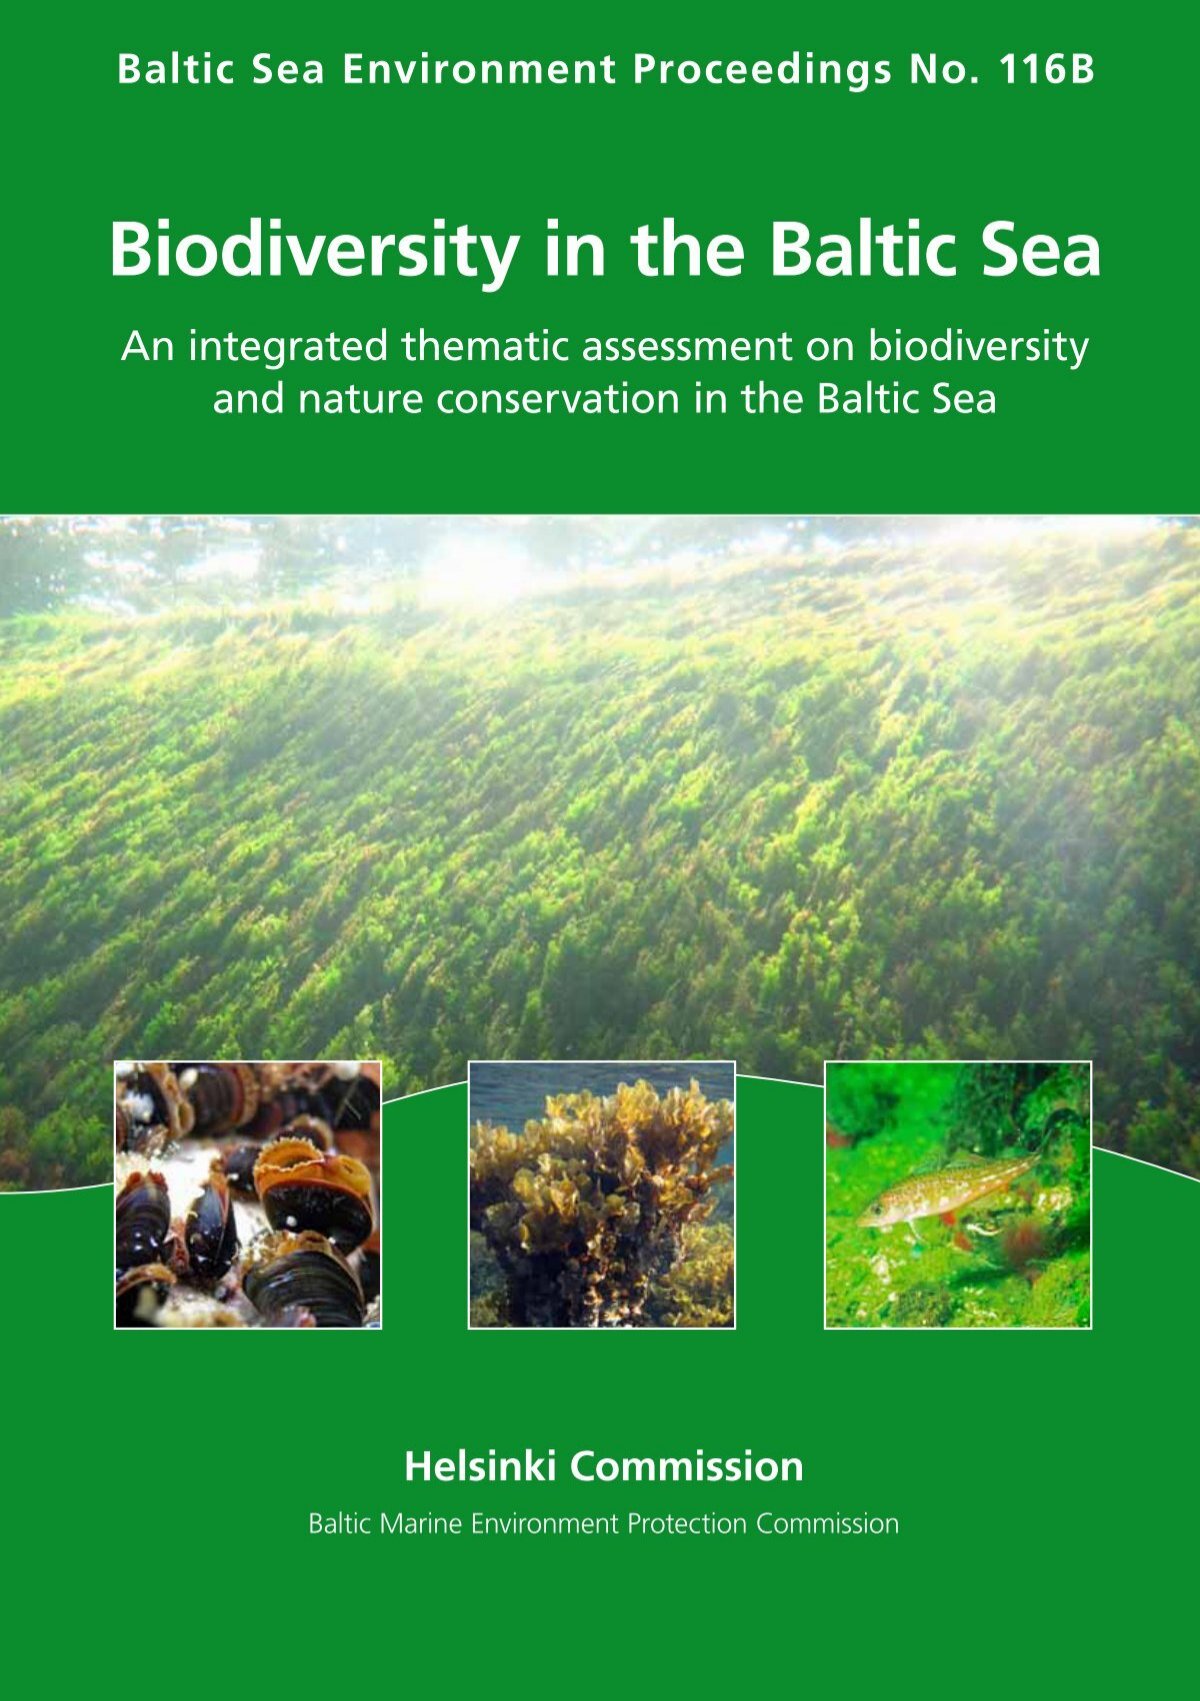 BSEP116B Biodiversity the Baltic Helcom